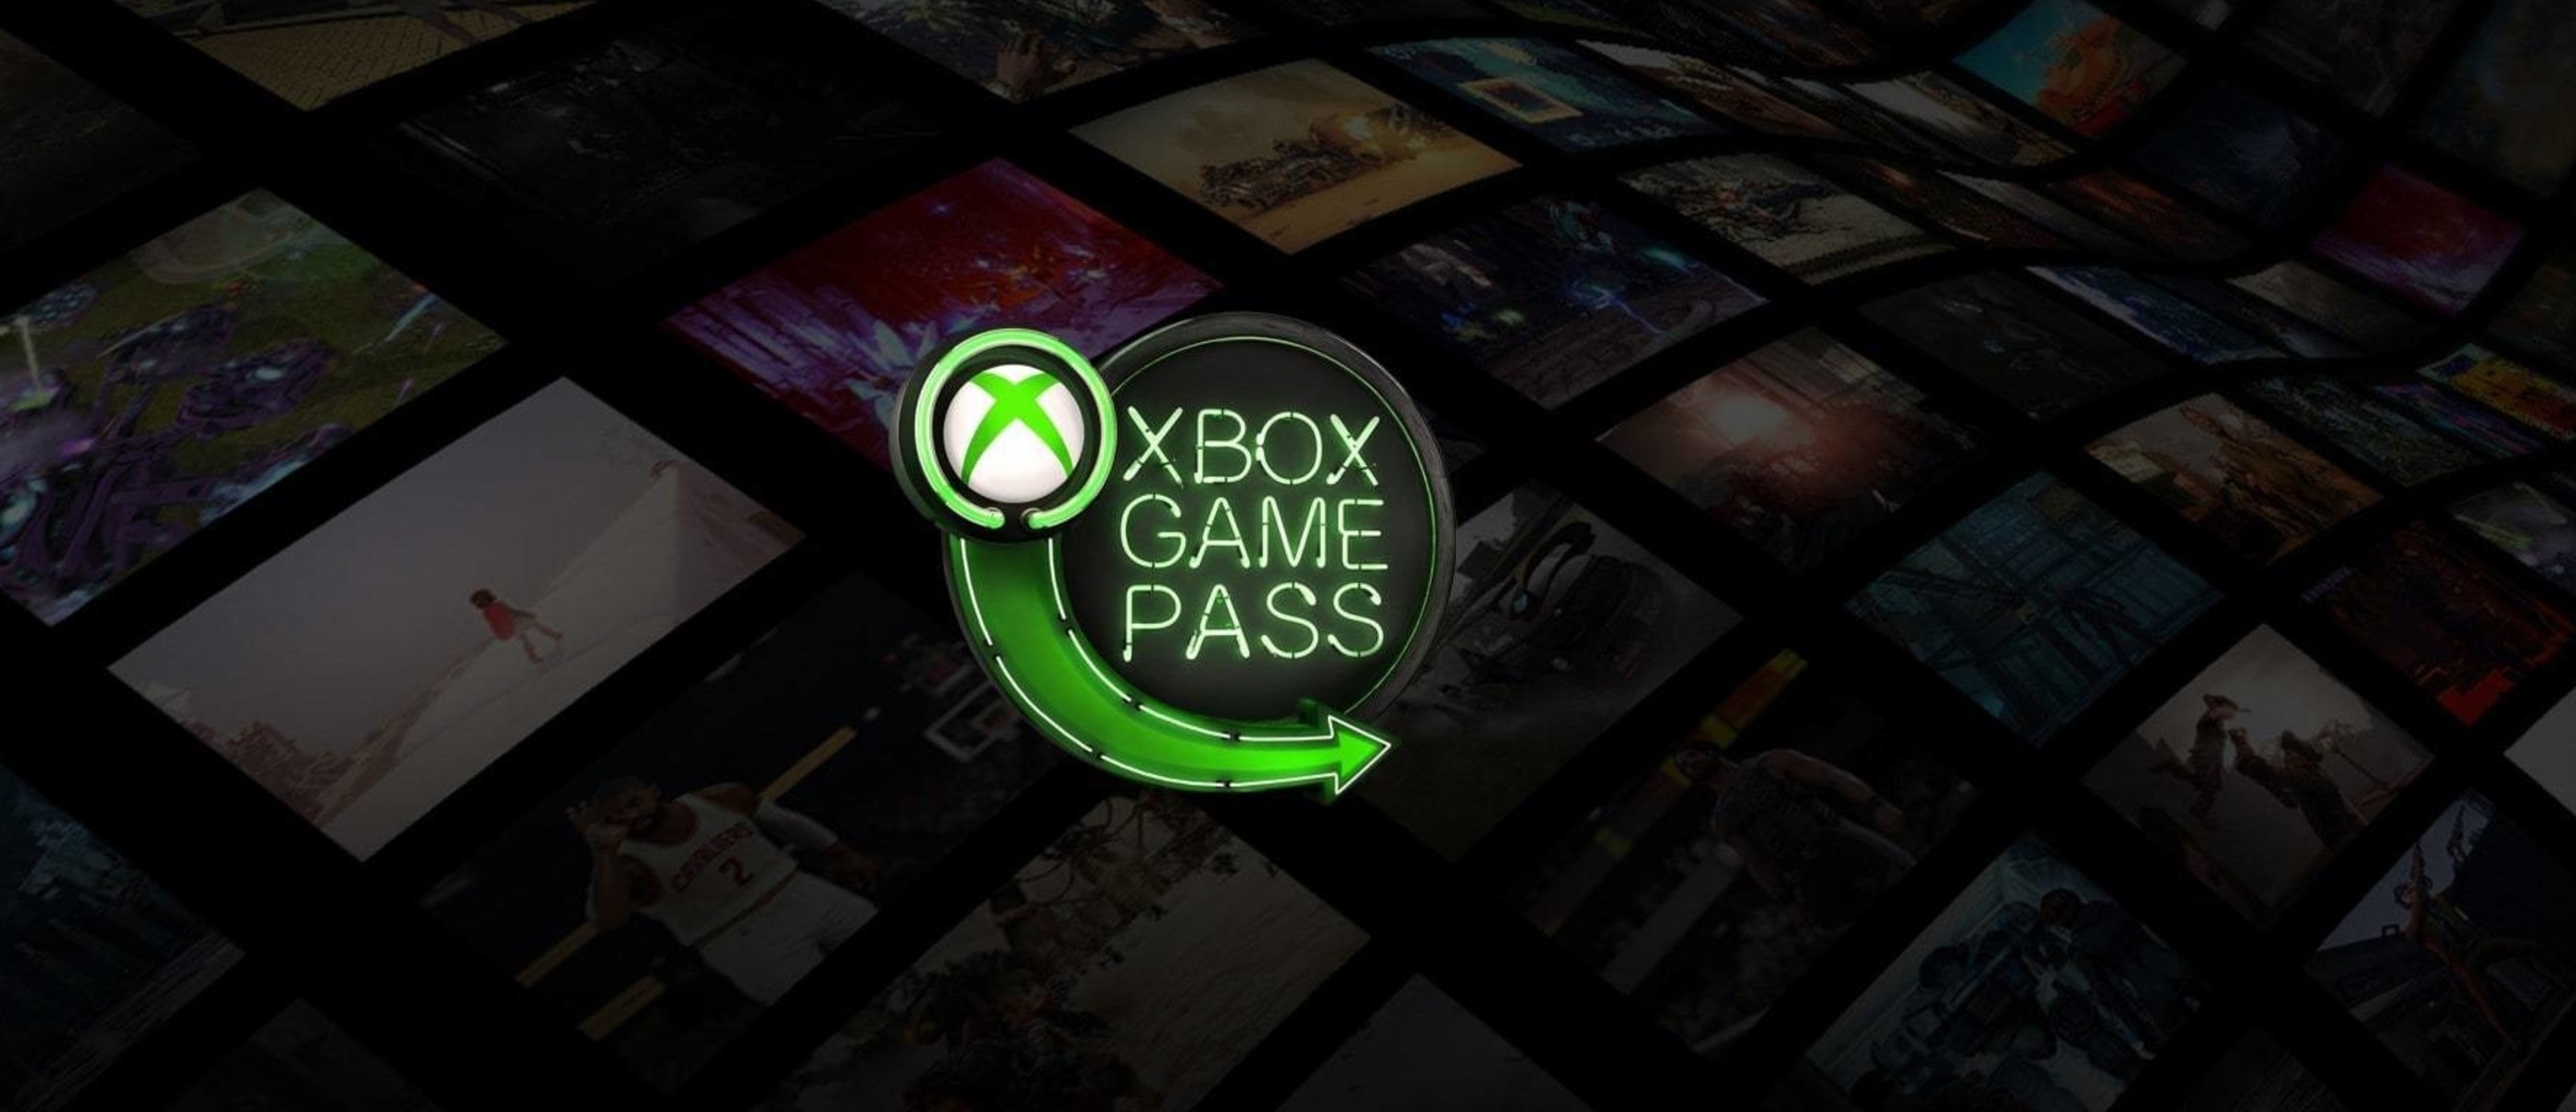 Expeditions game pass. Game Pass. Xbox game Pass games. Xbox Pass. Pass в играх.